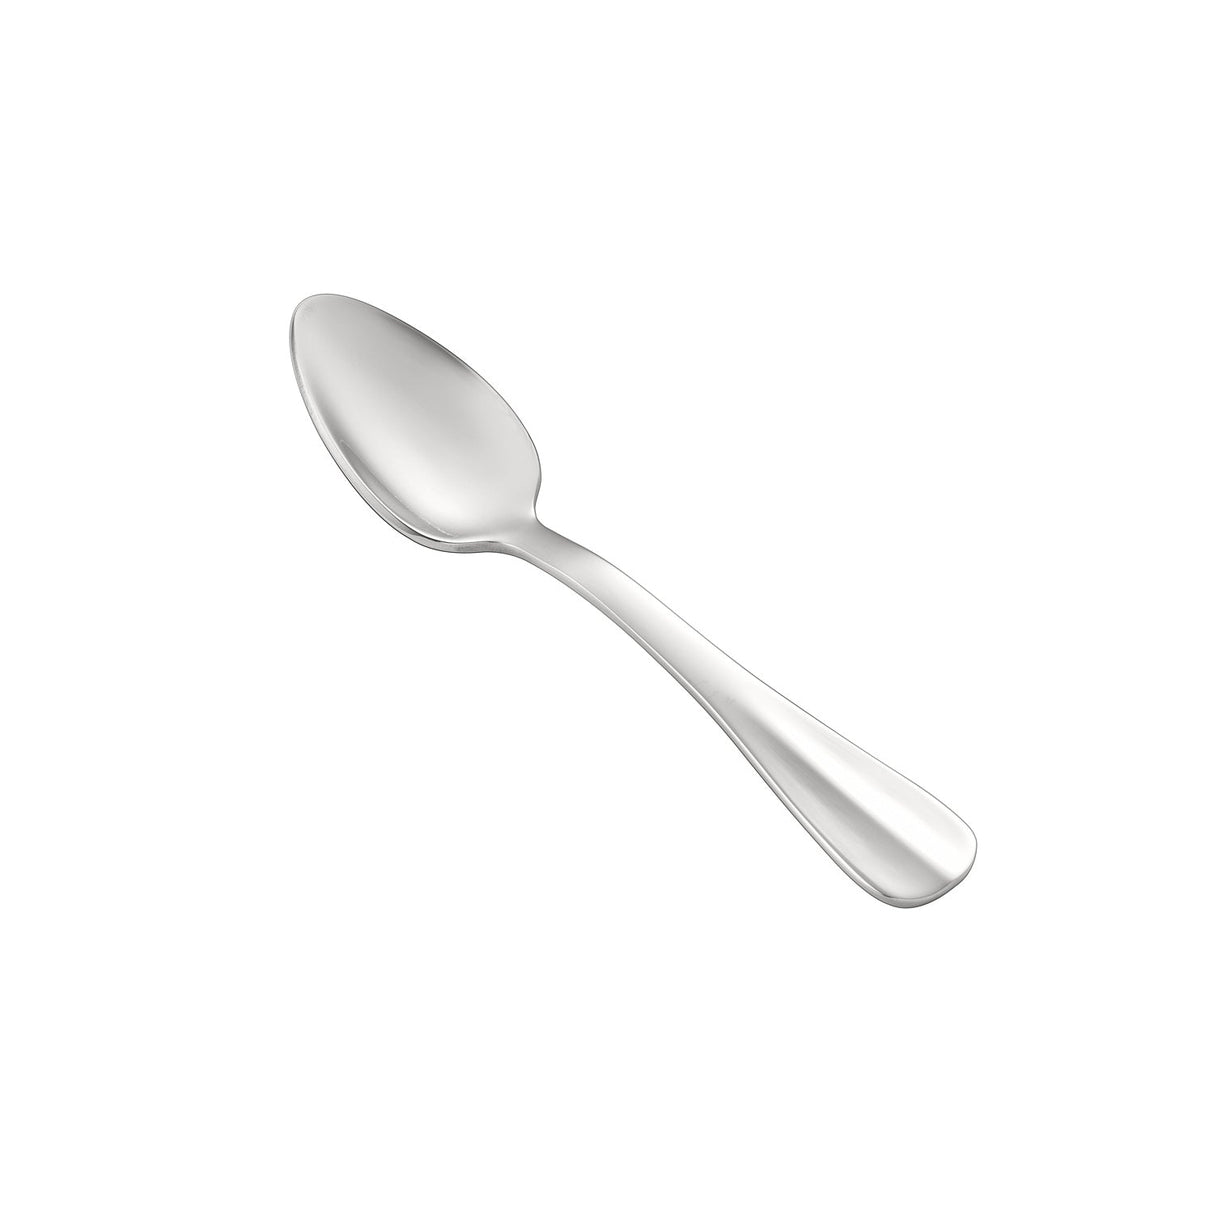 Exquisite Demitasse Spoon 18/8 Xtra. HW 4 3/8"